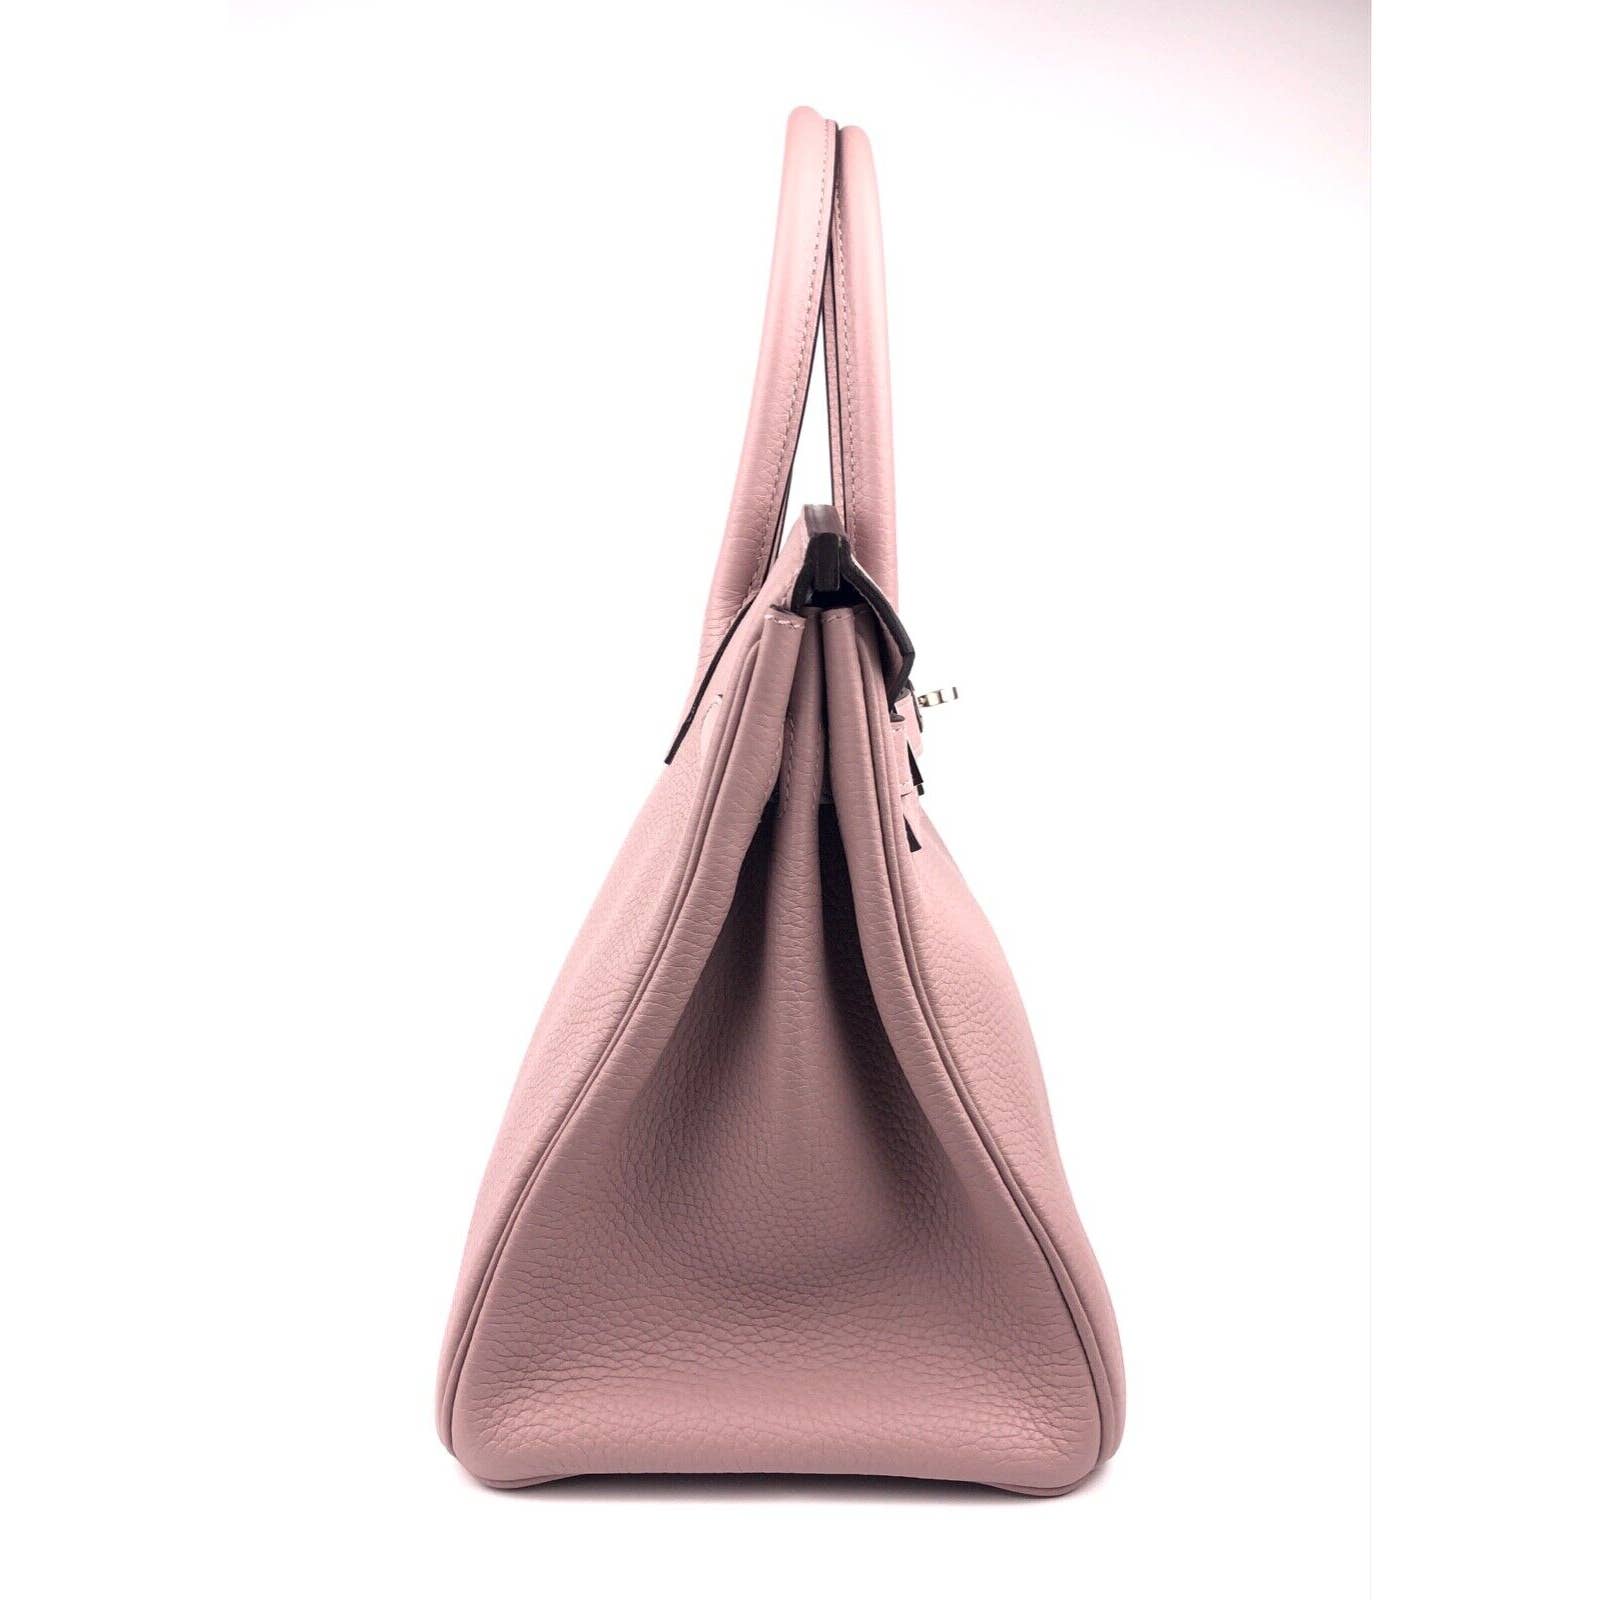 Pre-owned Light Pink Leather Palladium Hardware Birkin 30 Bag